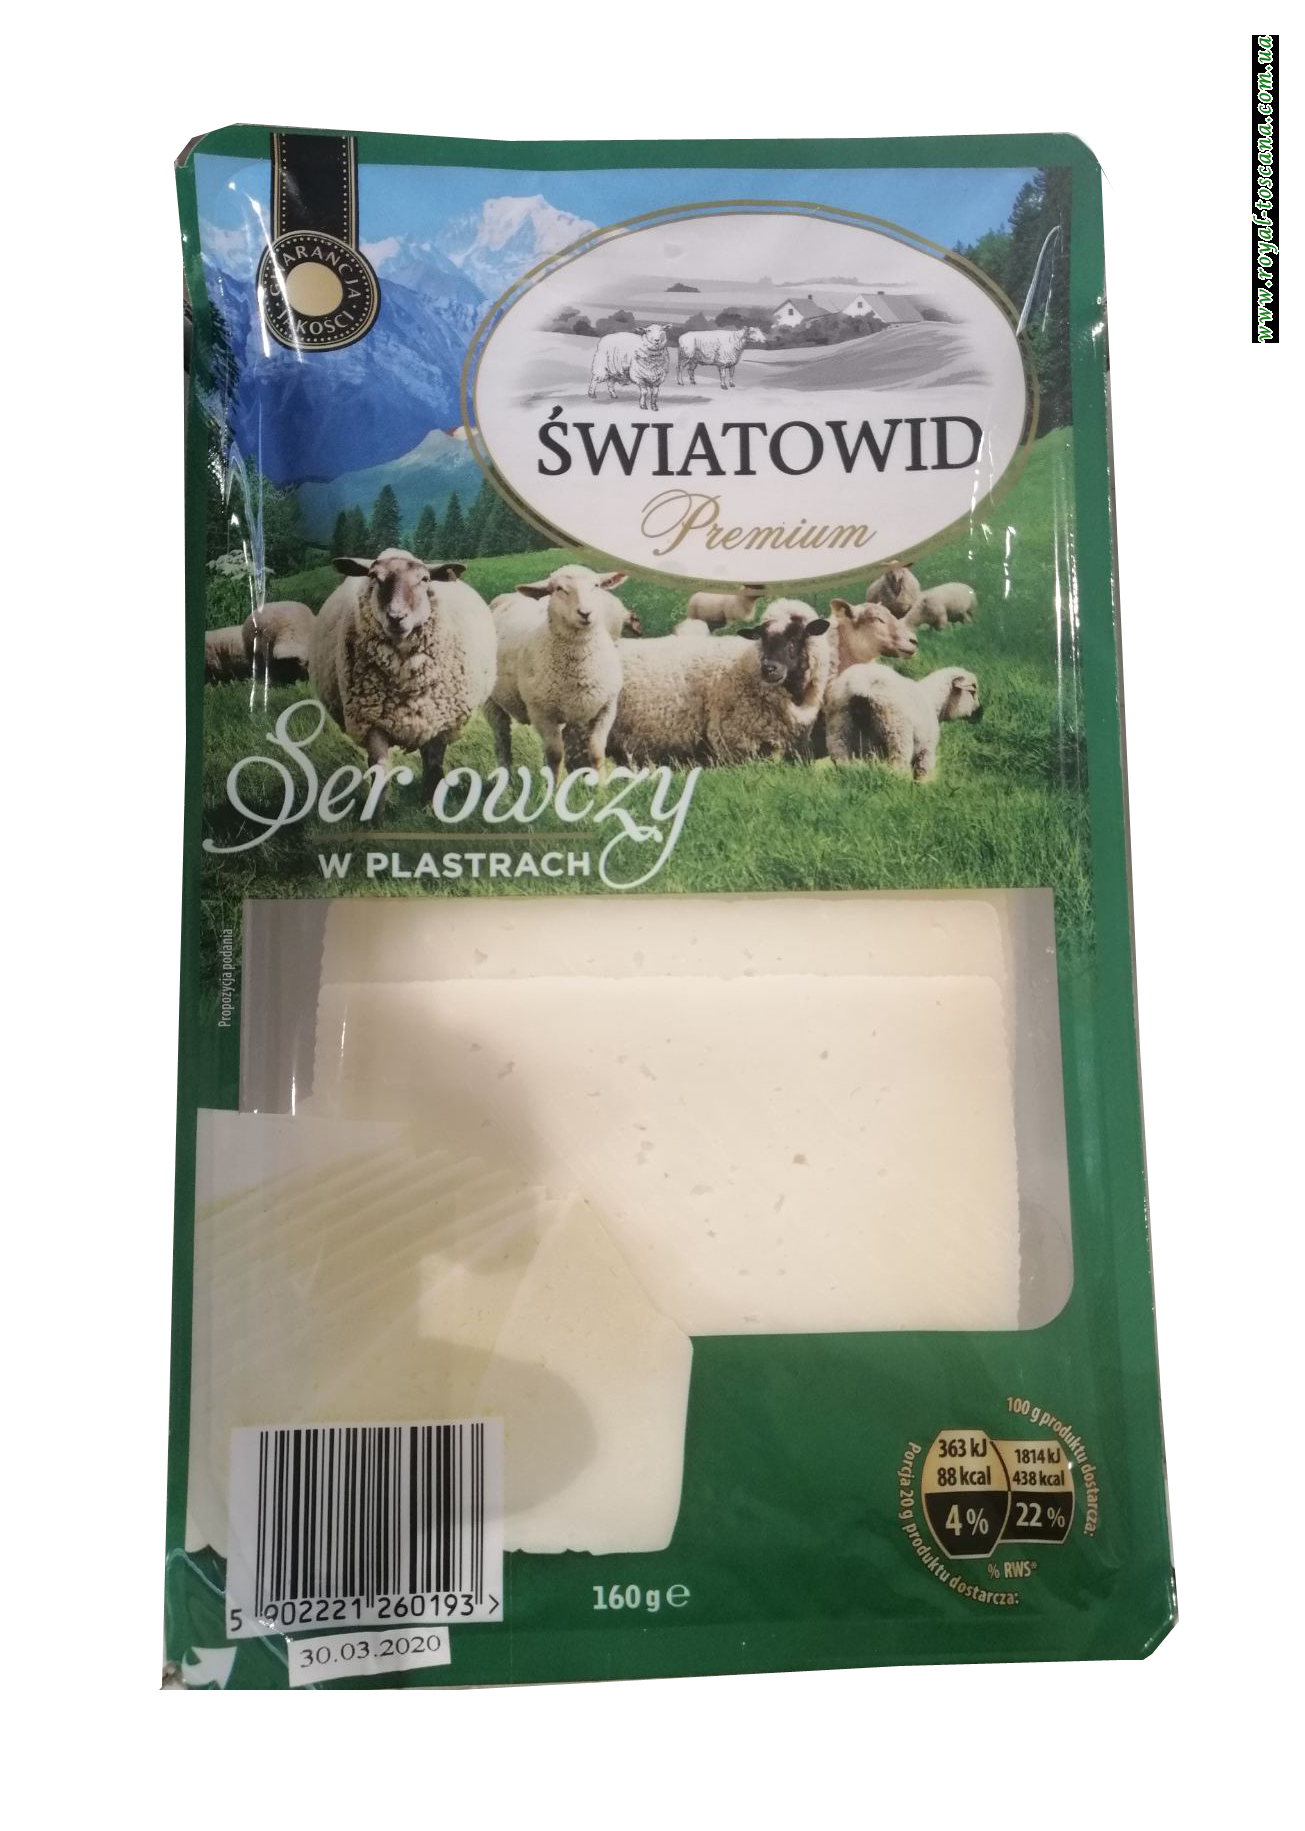 Сыр, нарезка, овечий Swiatowid,160г